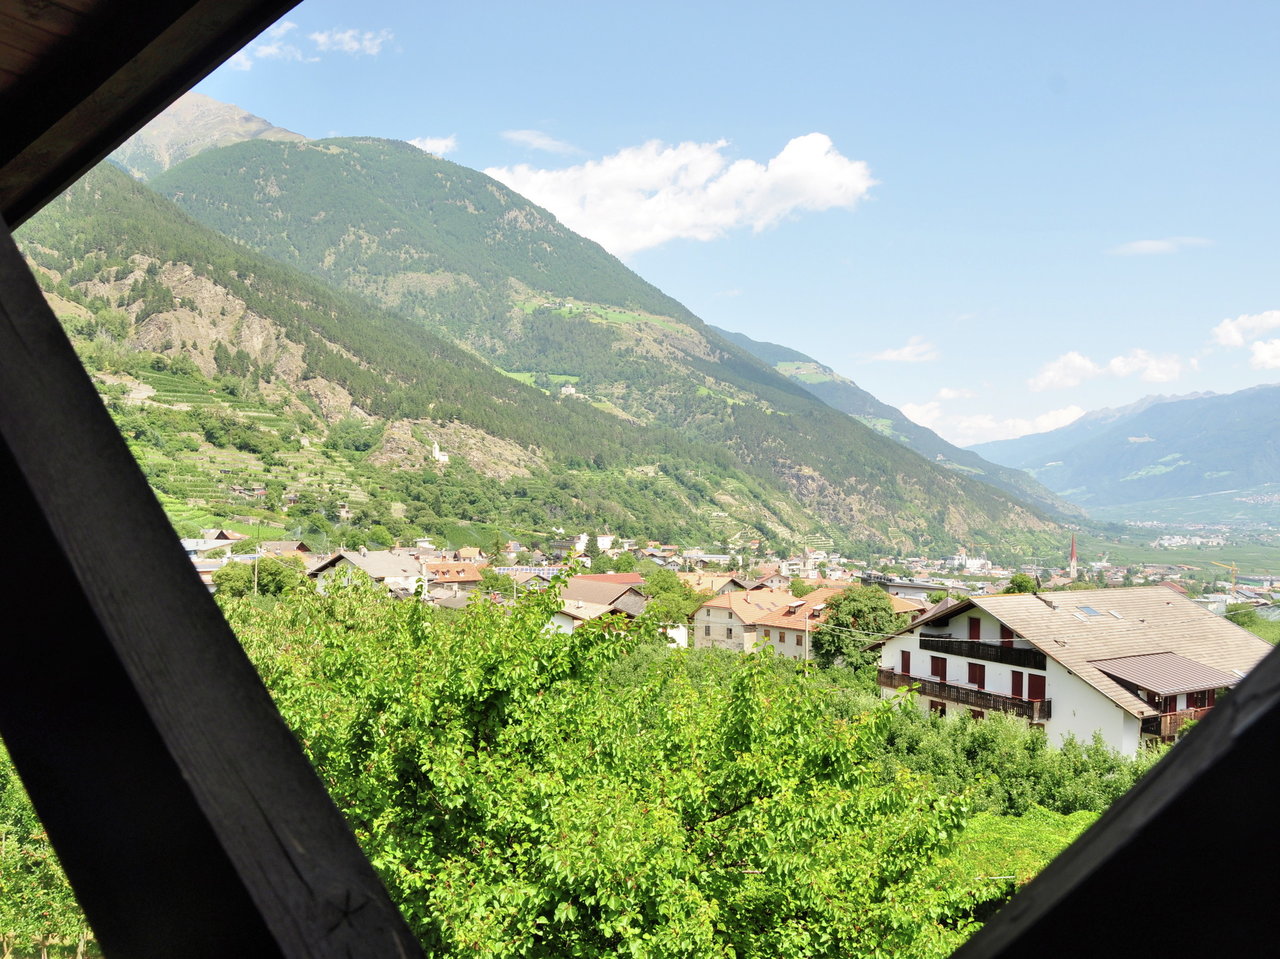 View in the Venosta Valley from the balcony of the Pension Feldgärtenhof